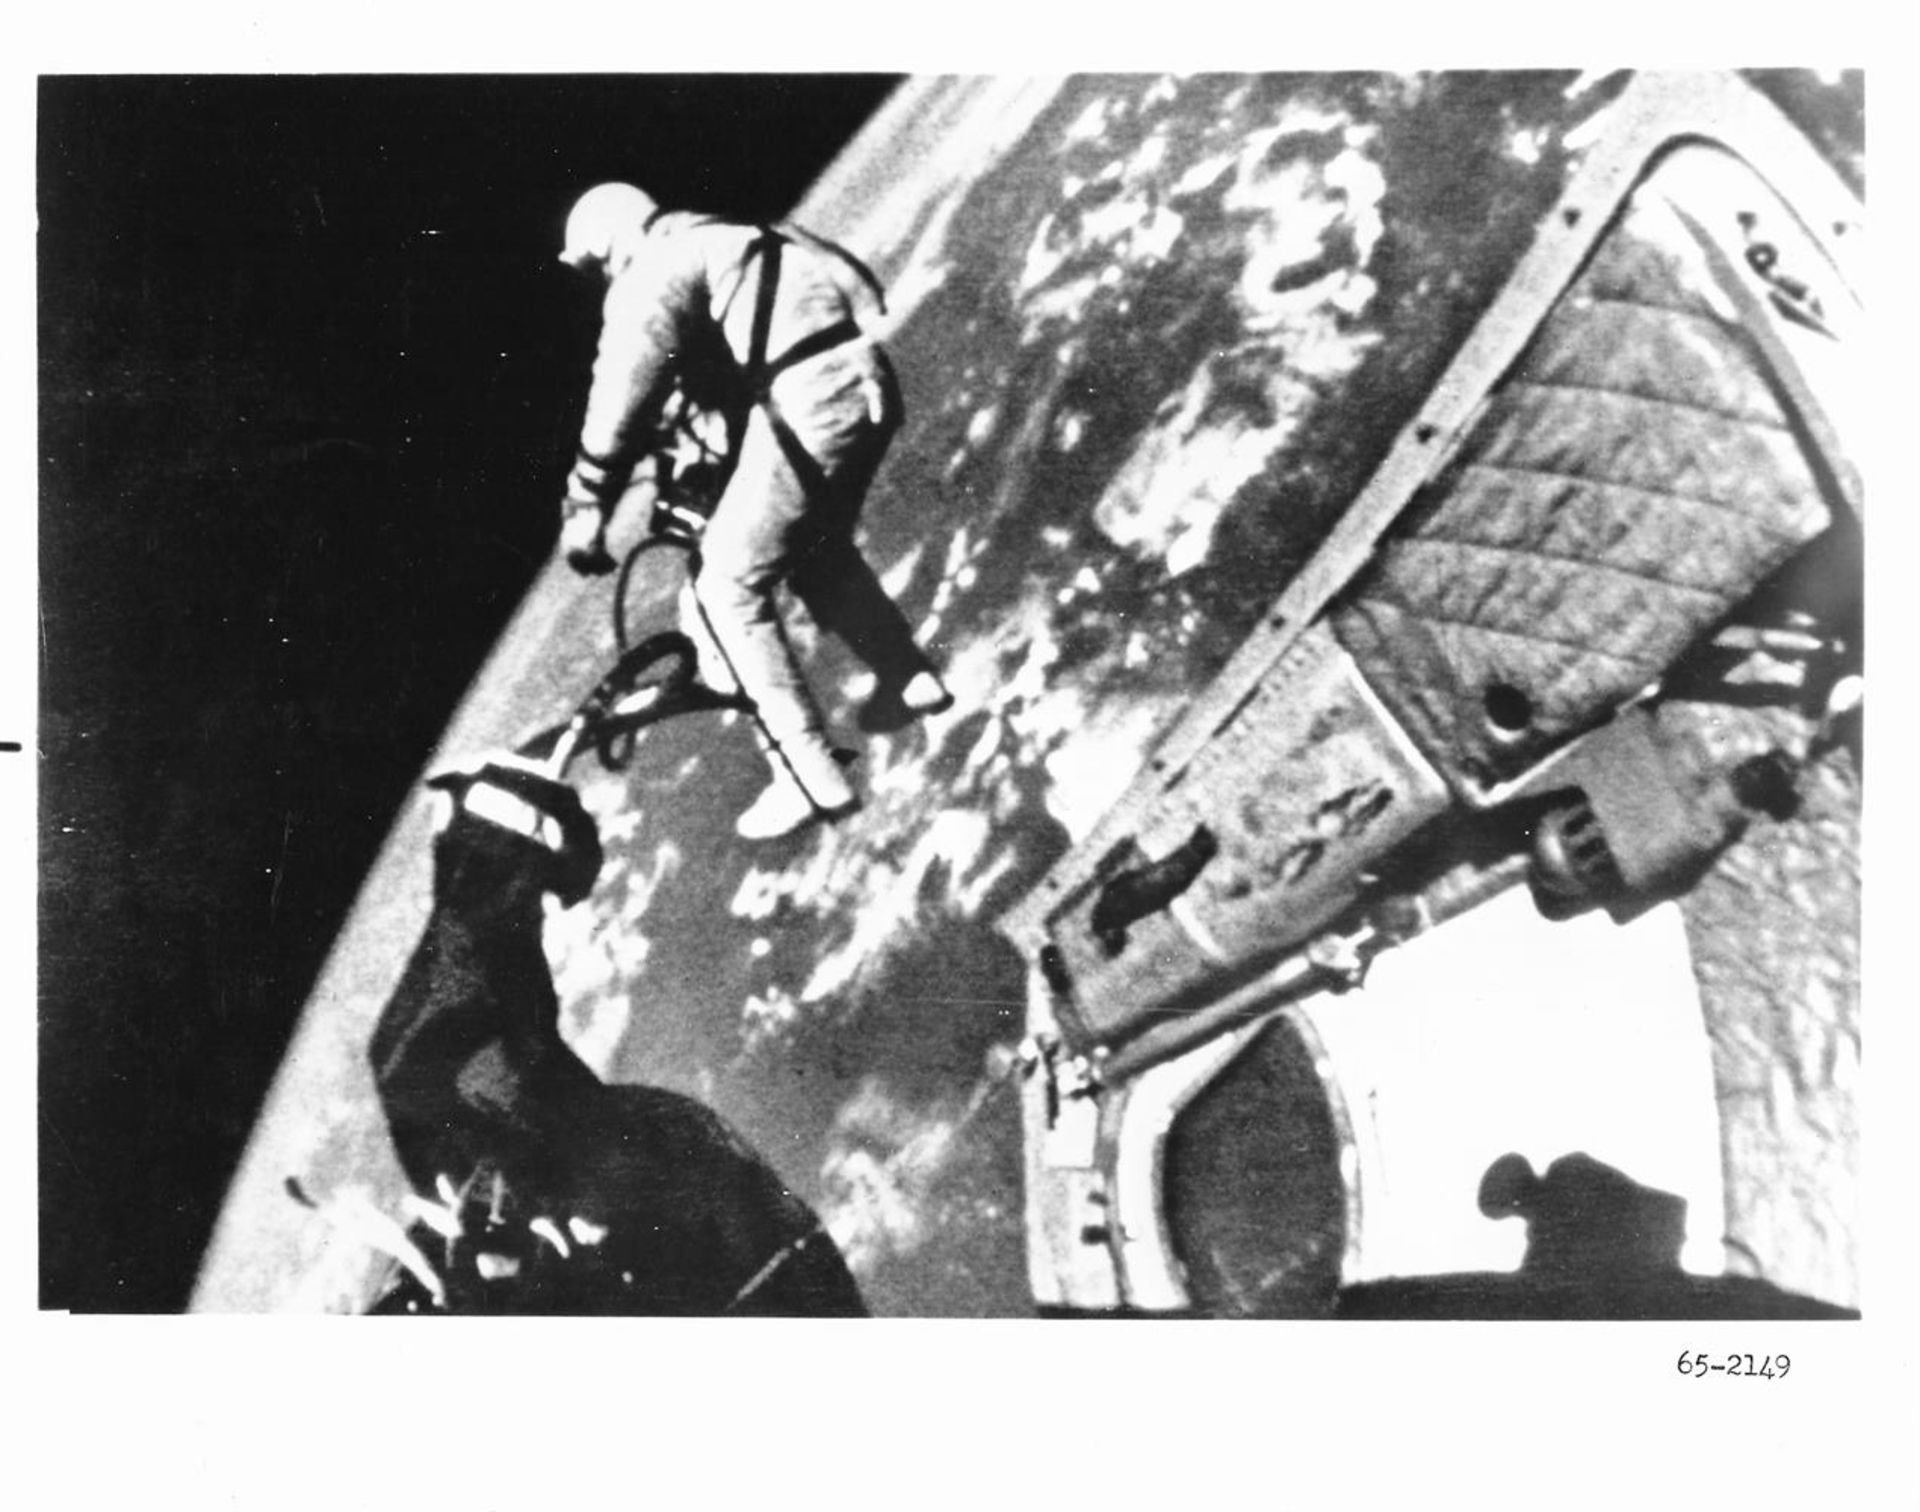 Ed White floats in zero gravity during the first U.S. EVA (2 b&w views), Gemini 4, 3-7 Jun1962 - Image 3 of 4